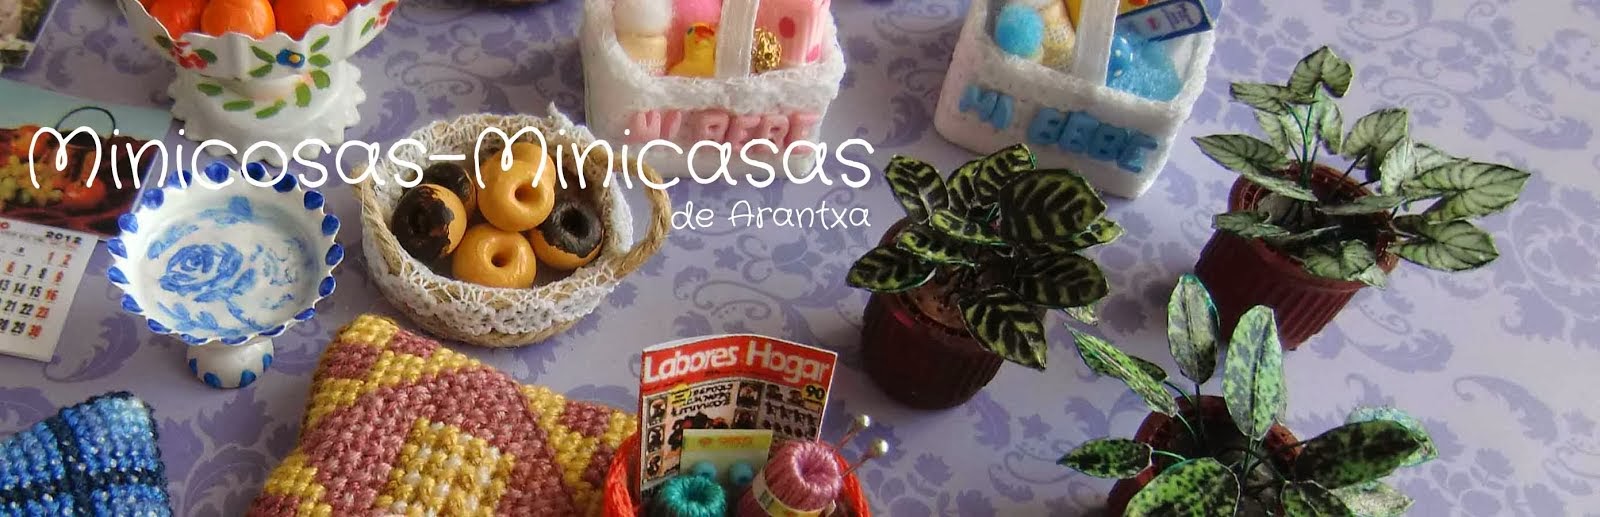 Minicosas-Minicasas